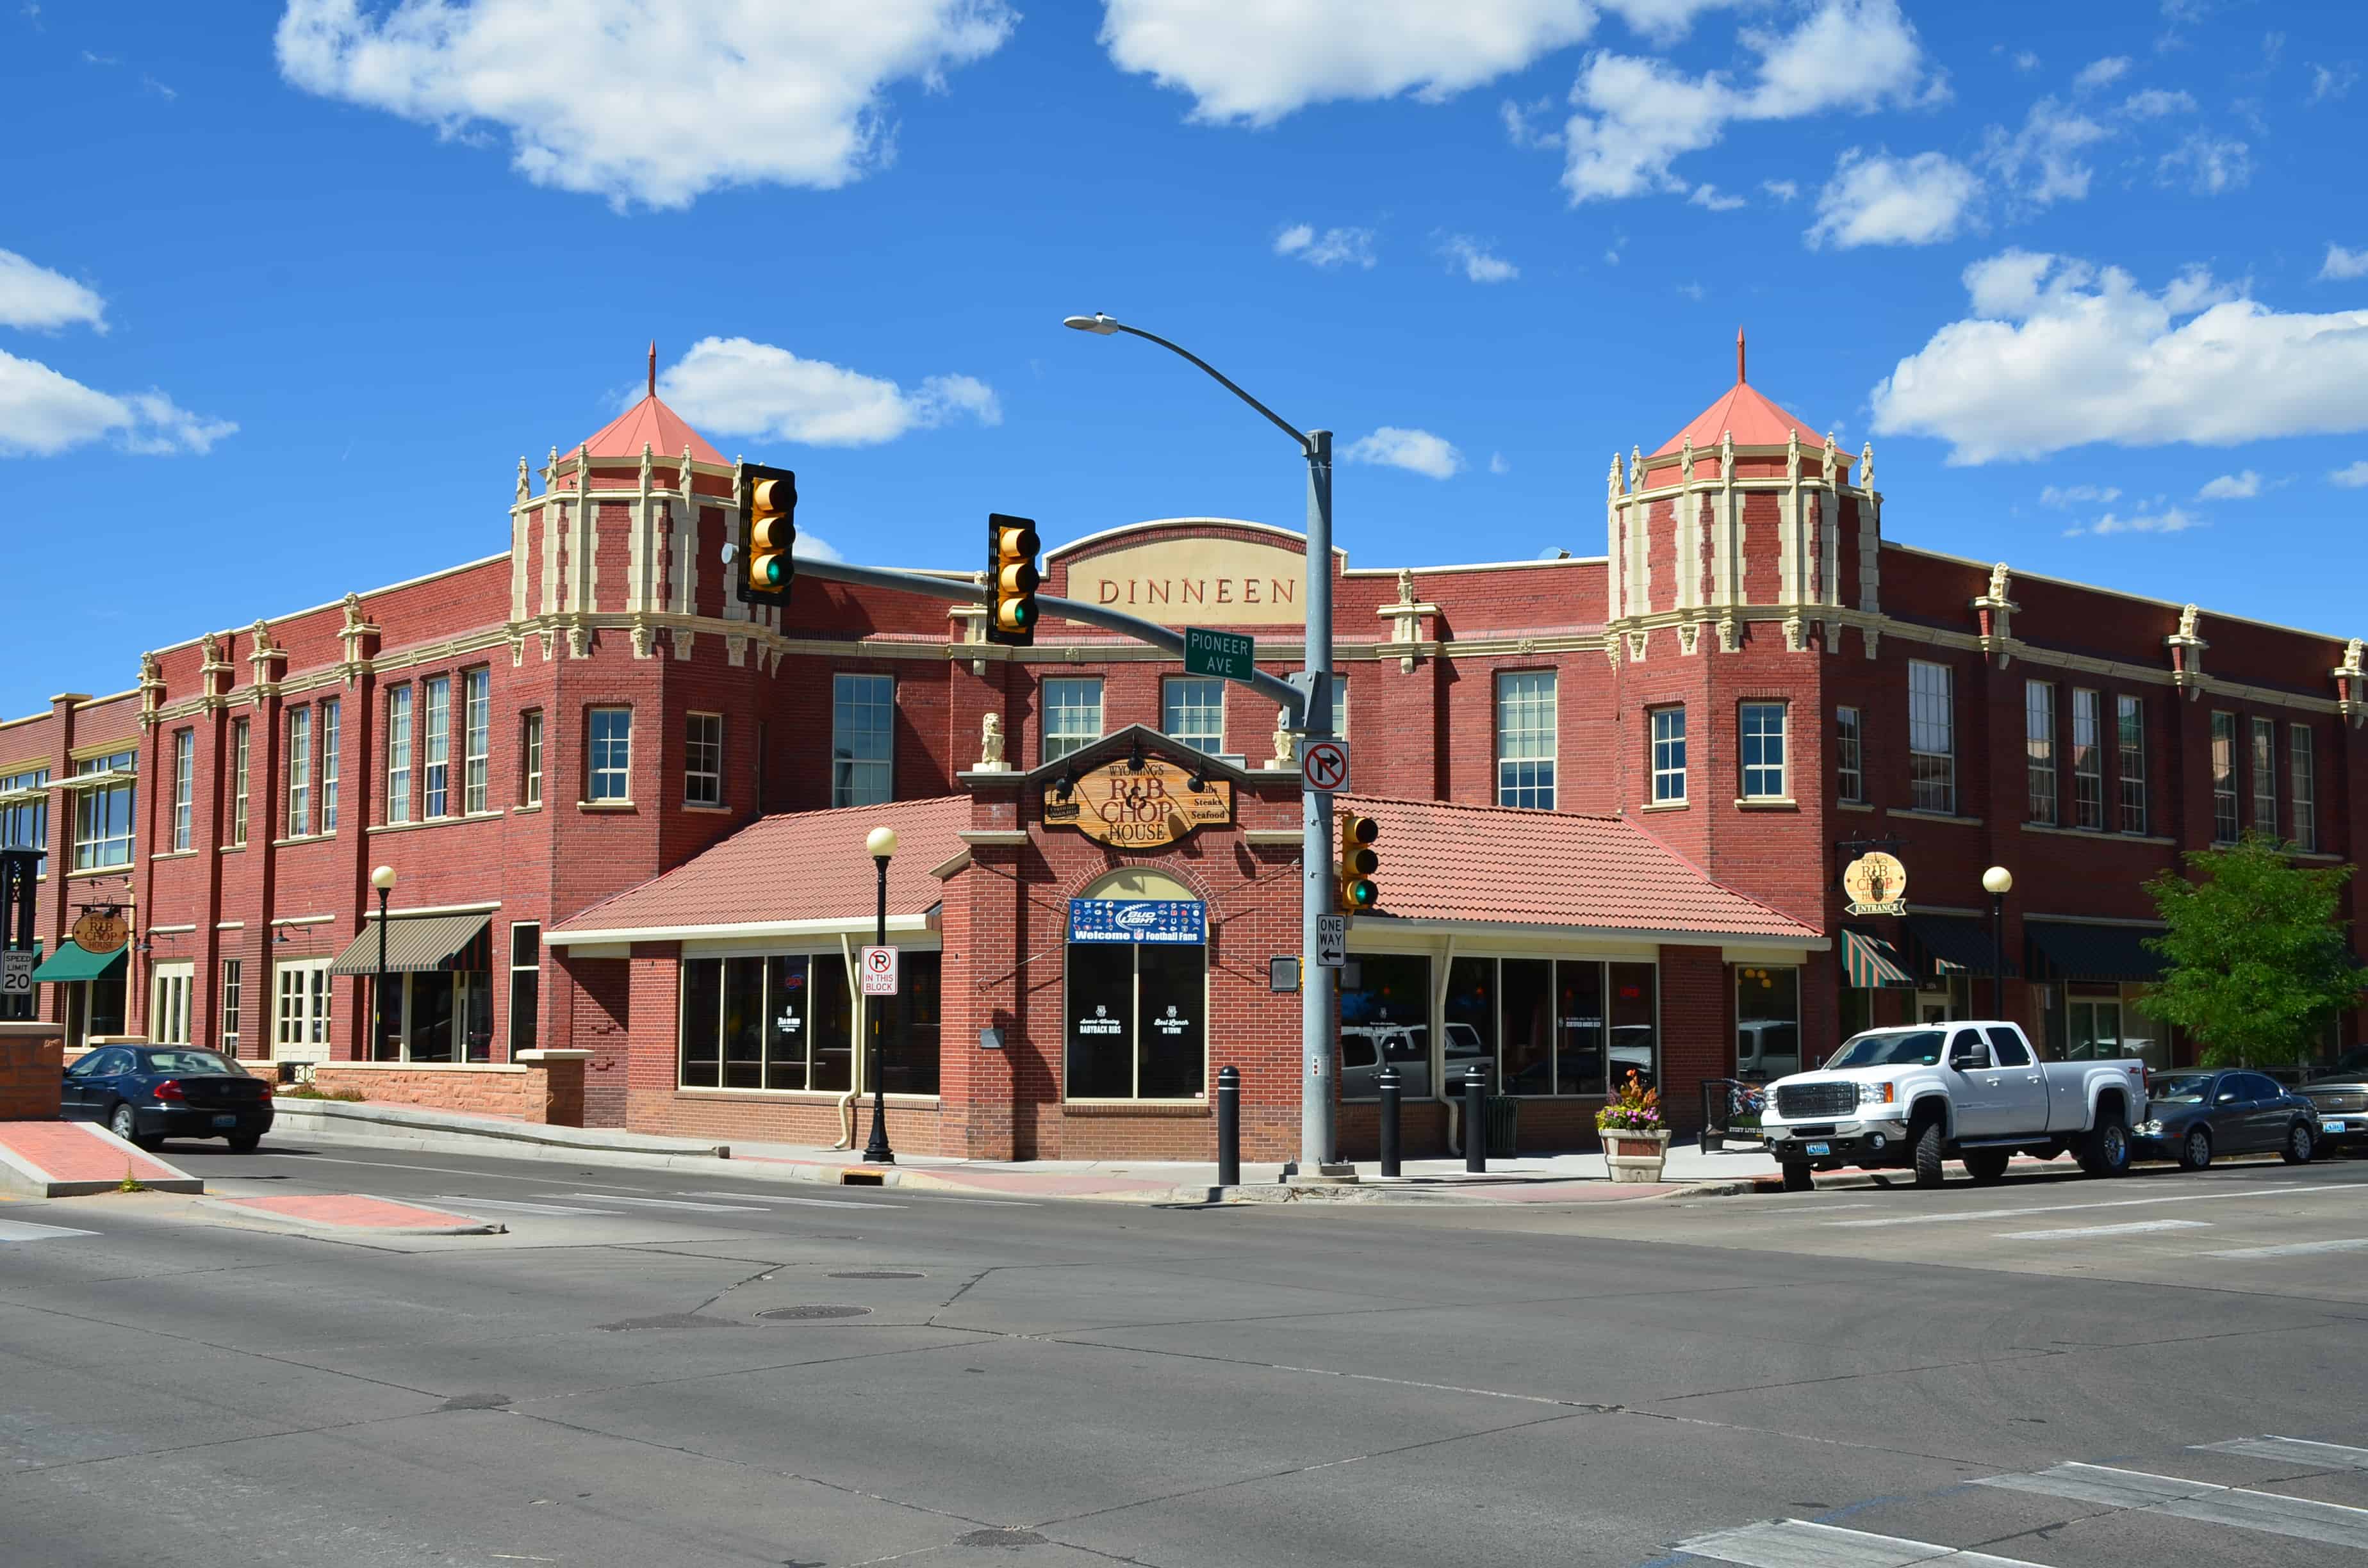 Dinneen Motor Company Building in Cheyenne, Wyoming